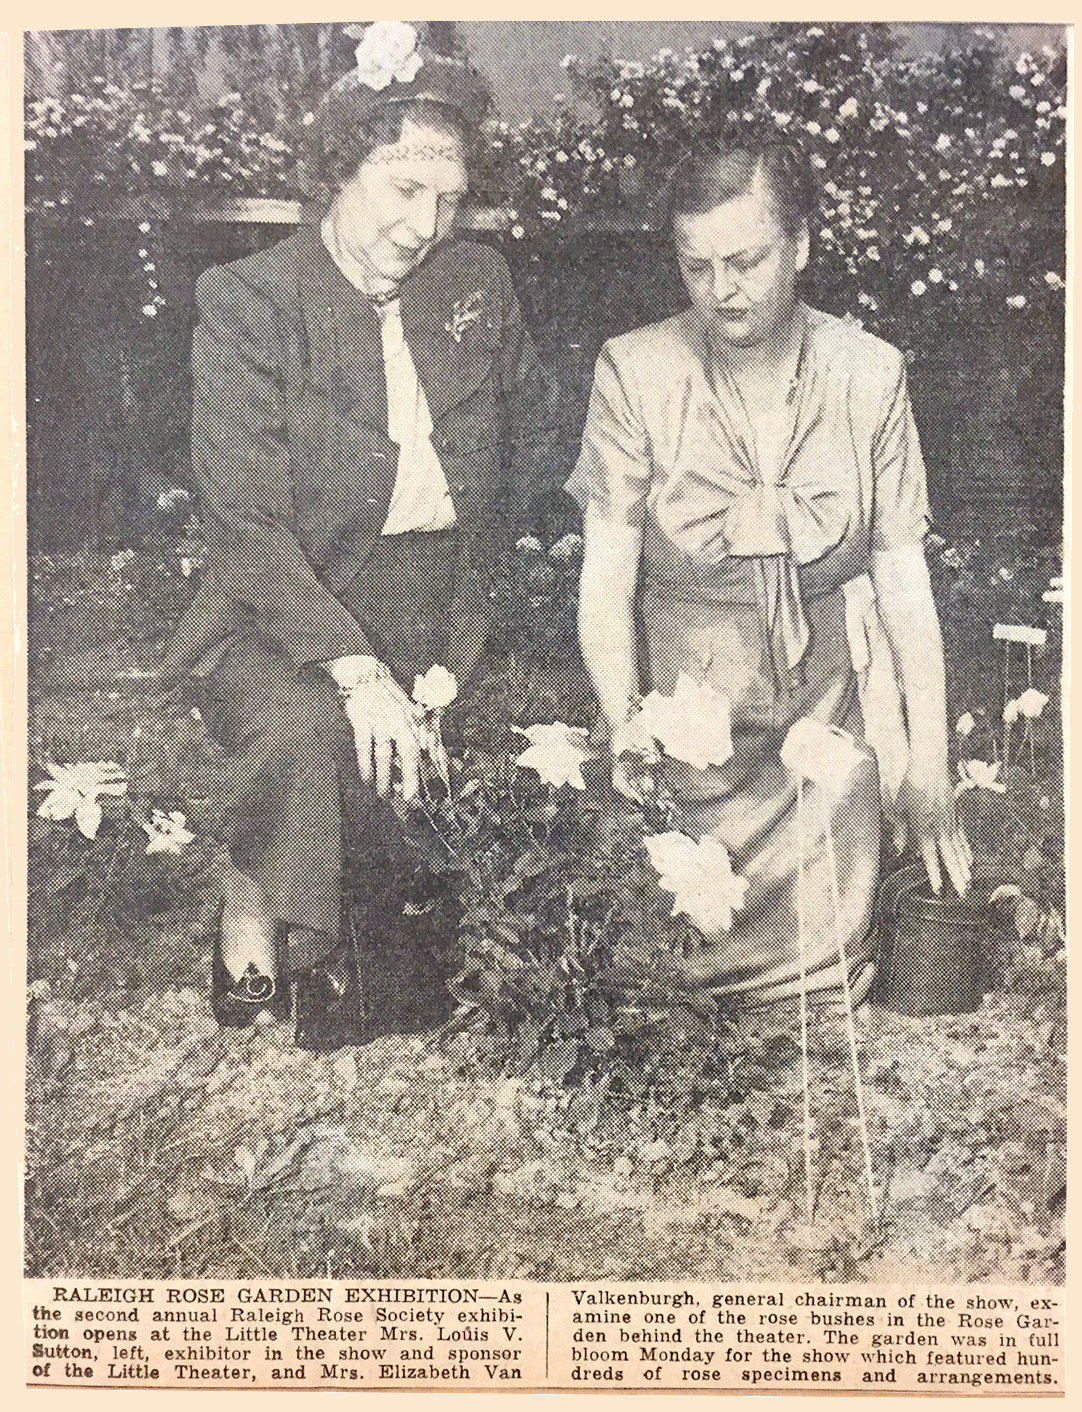 Cantey Veneble Sutton and Mrs. Elizabeth Van Valkenburgh